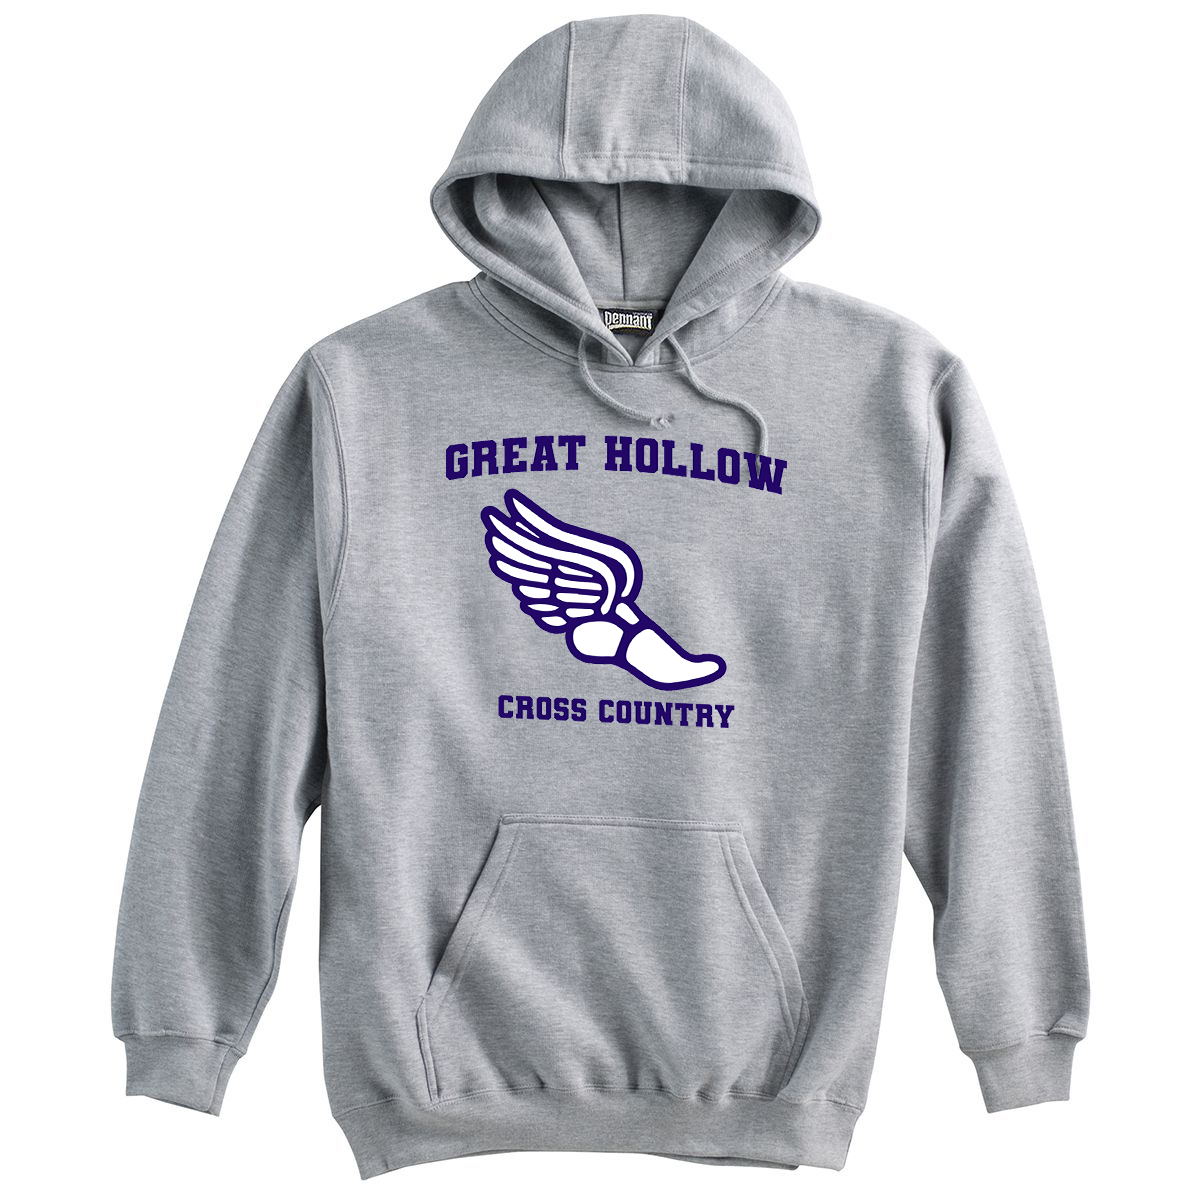 Great Hollow Cross Country Sweatshirt